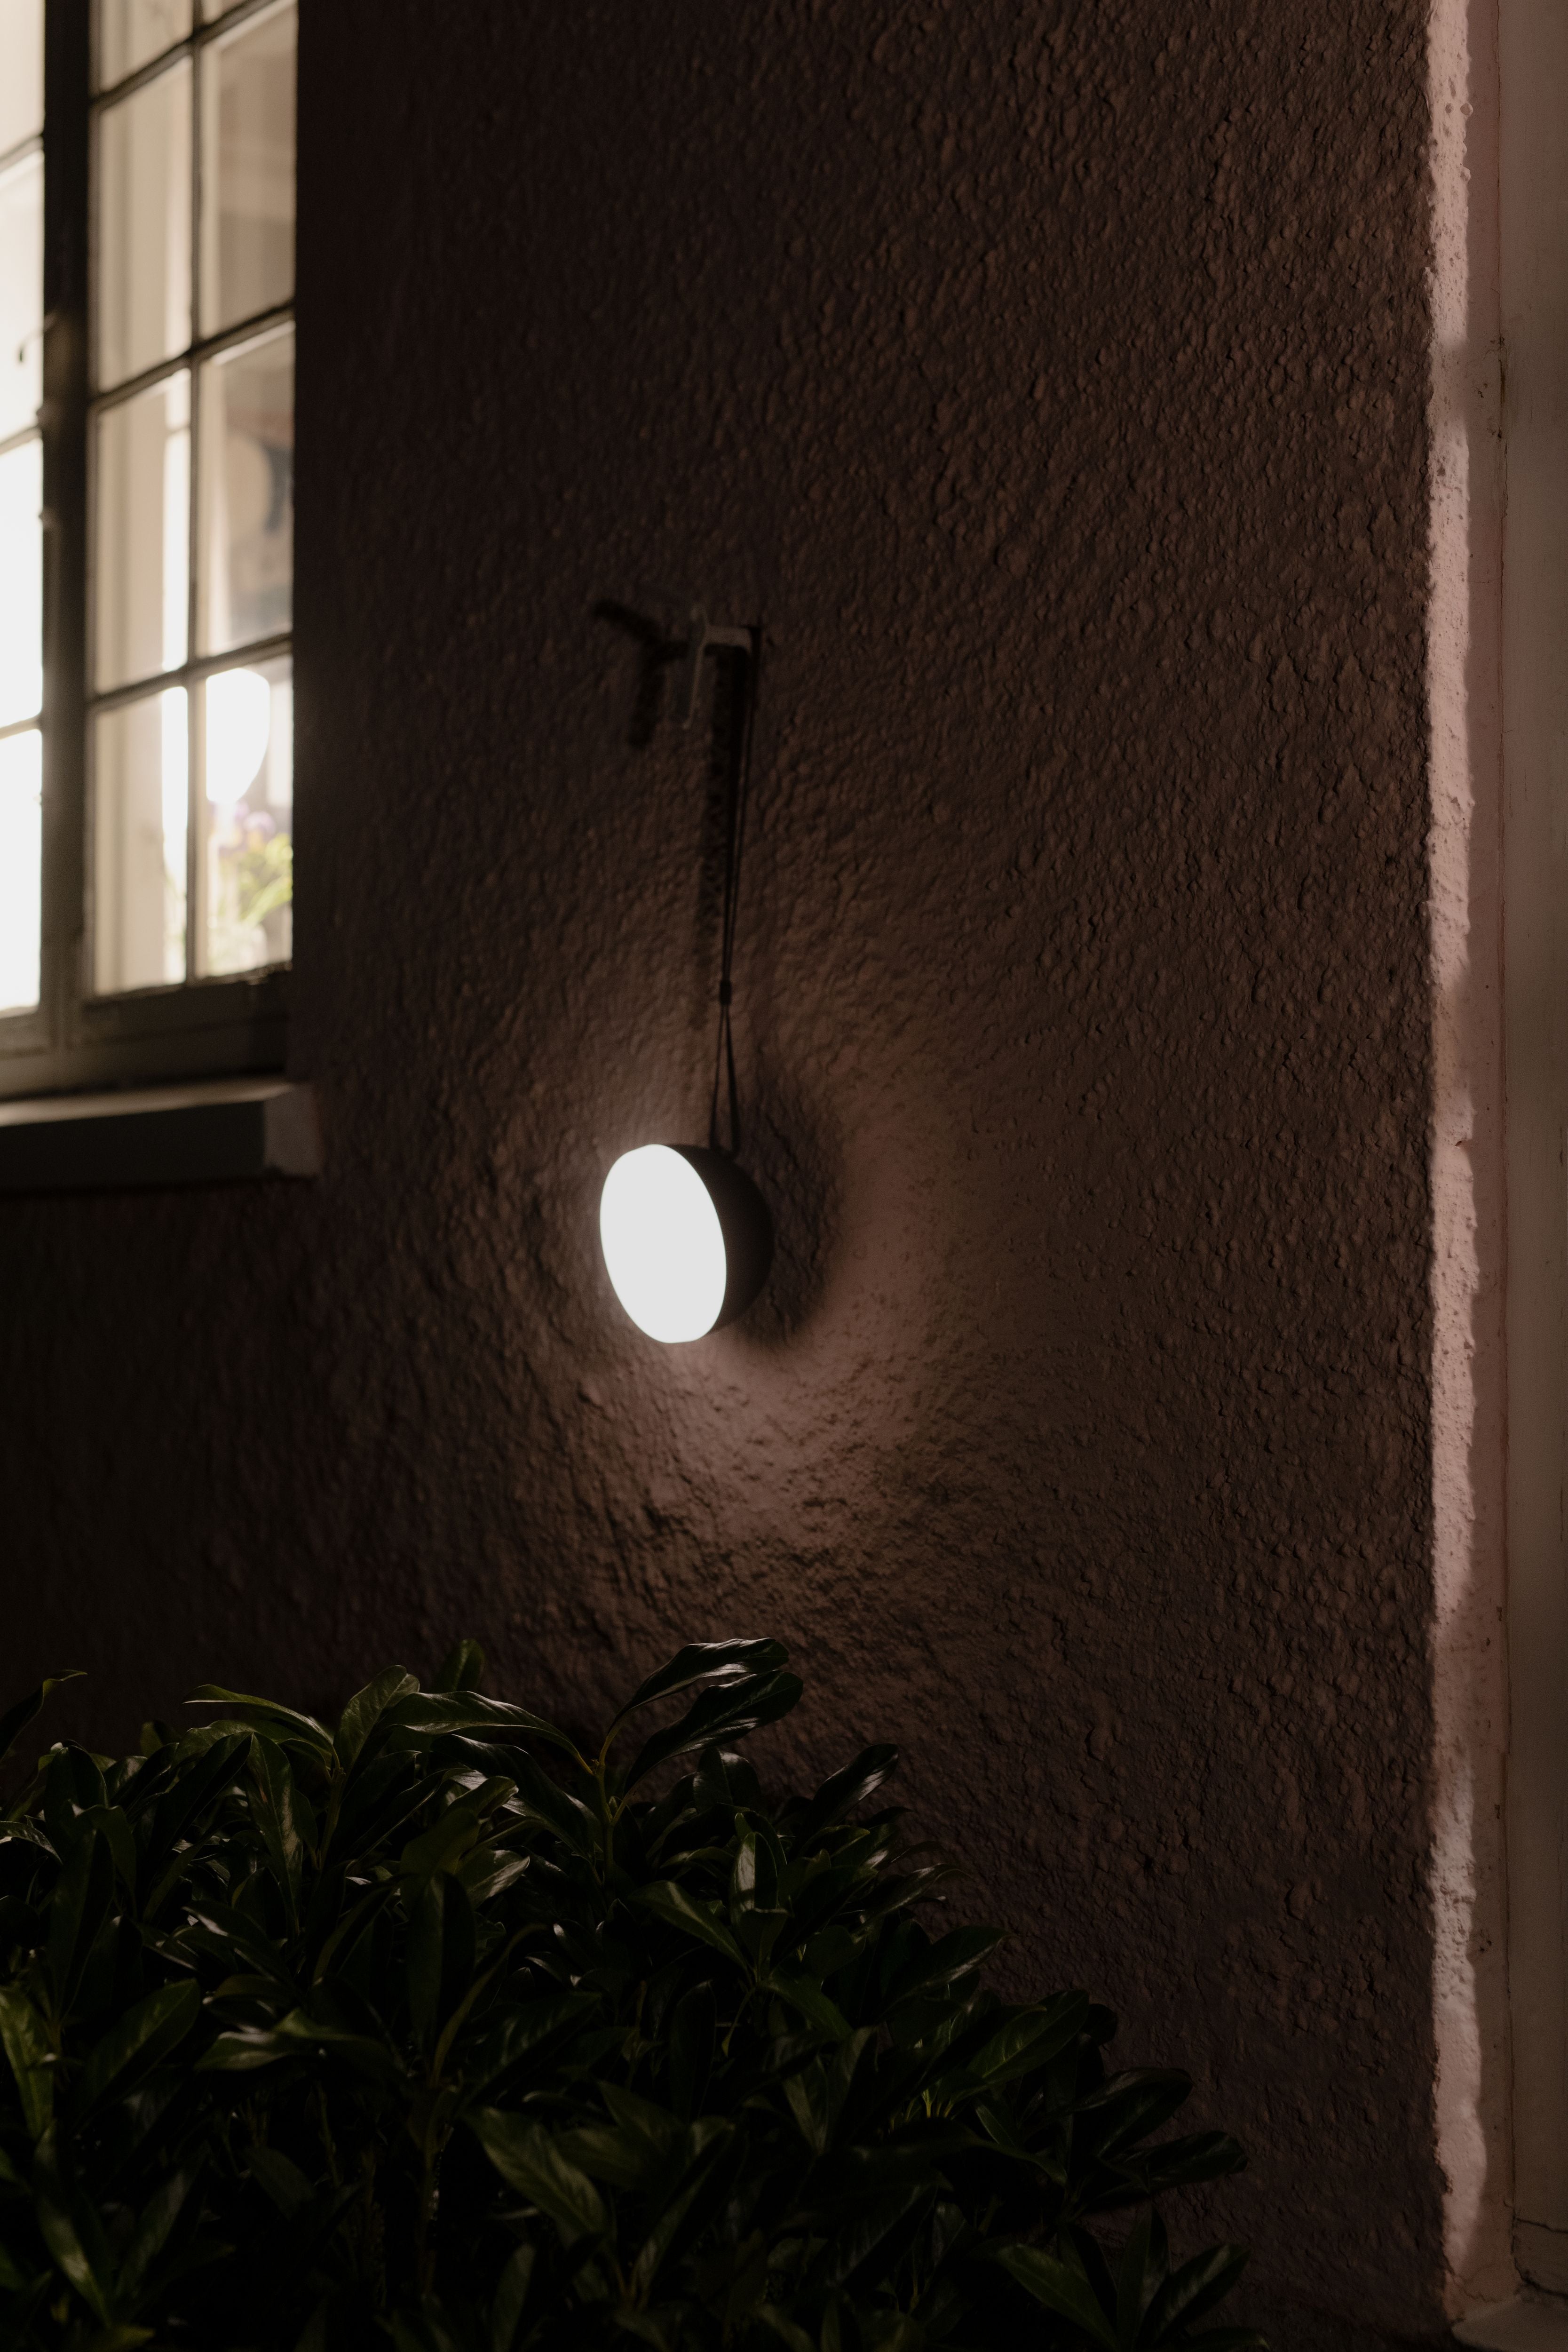 Sphere Adventure Light Tischlampe Tragbar, Warmes Grau - New Works